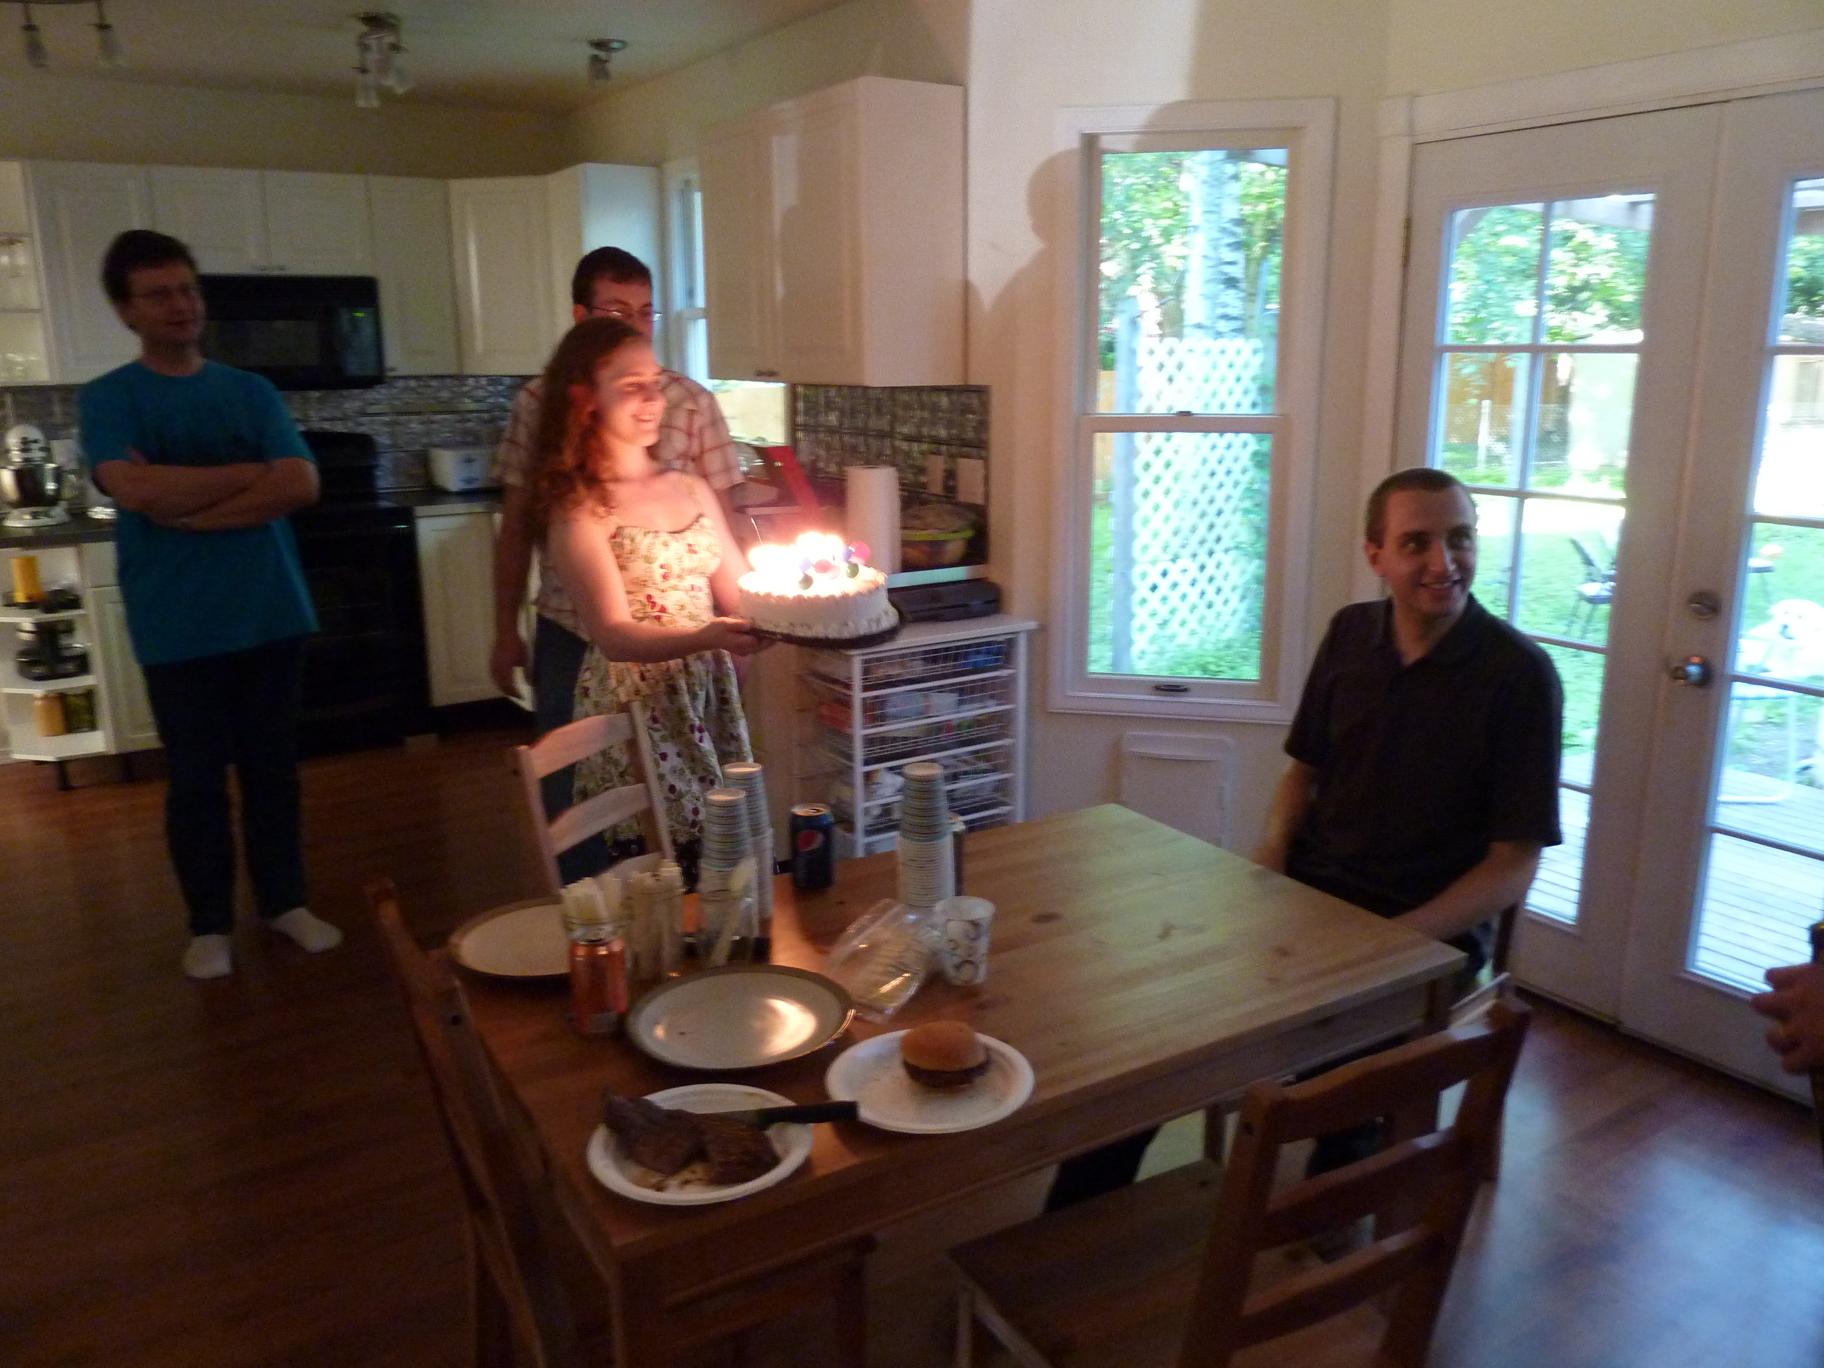 Shawna serving Justin a birthday cake || DMC-ZS3@4.1 | 1/8s | f3.3 | ISO400 || 2010-06-12 21:33:47